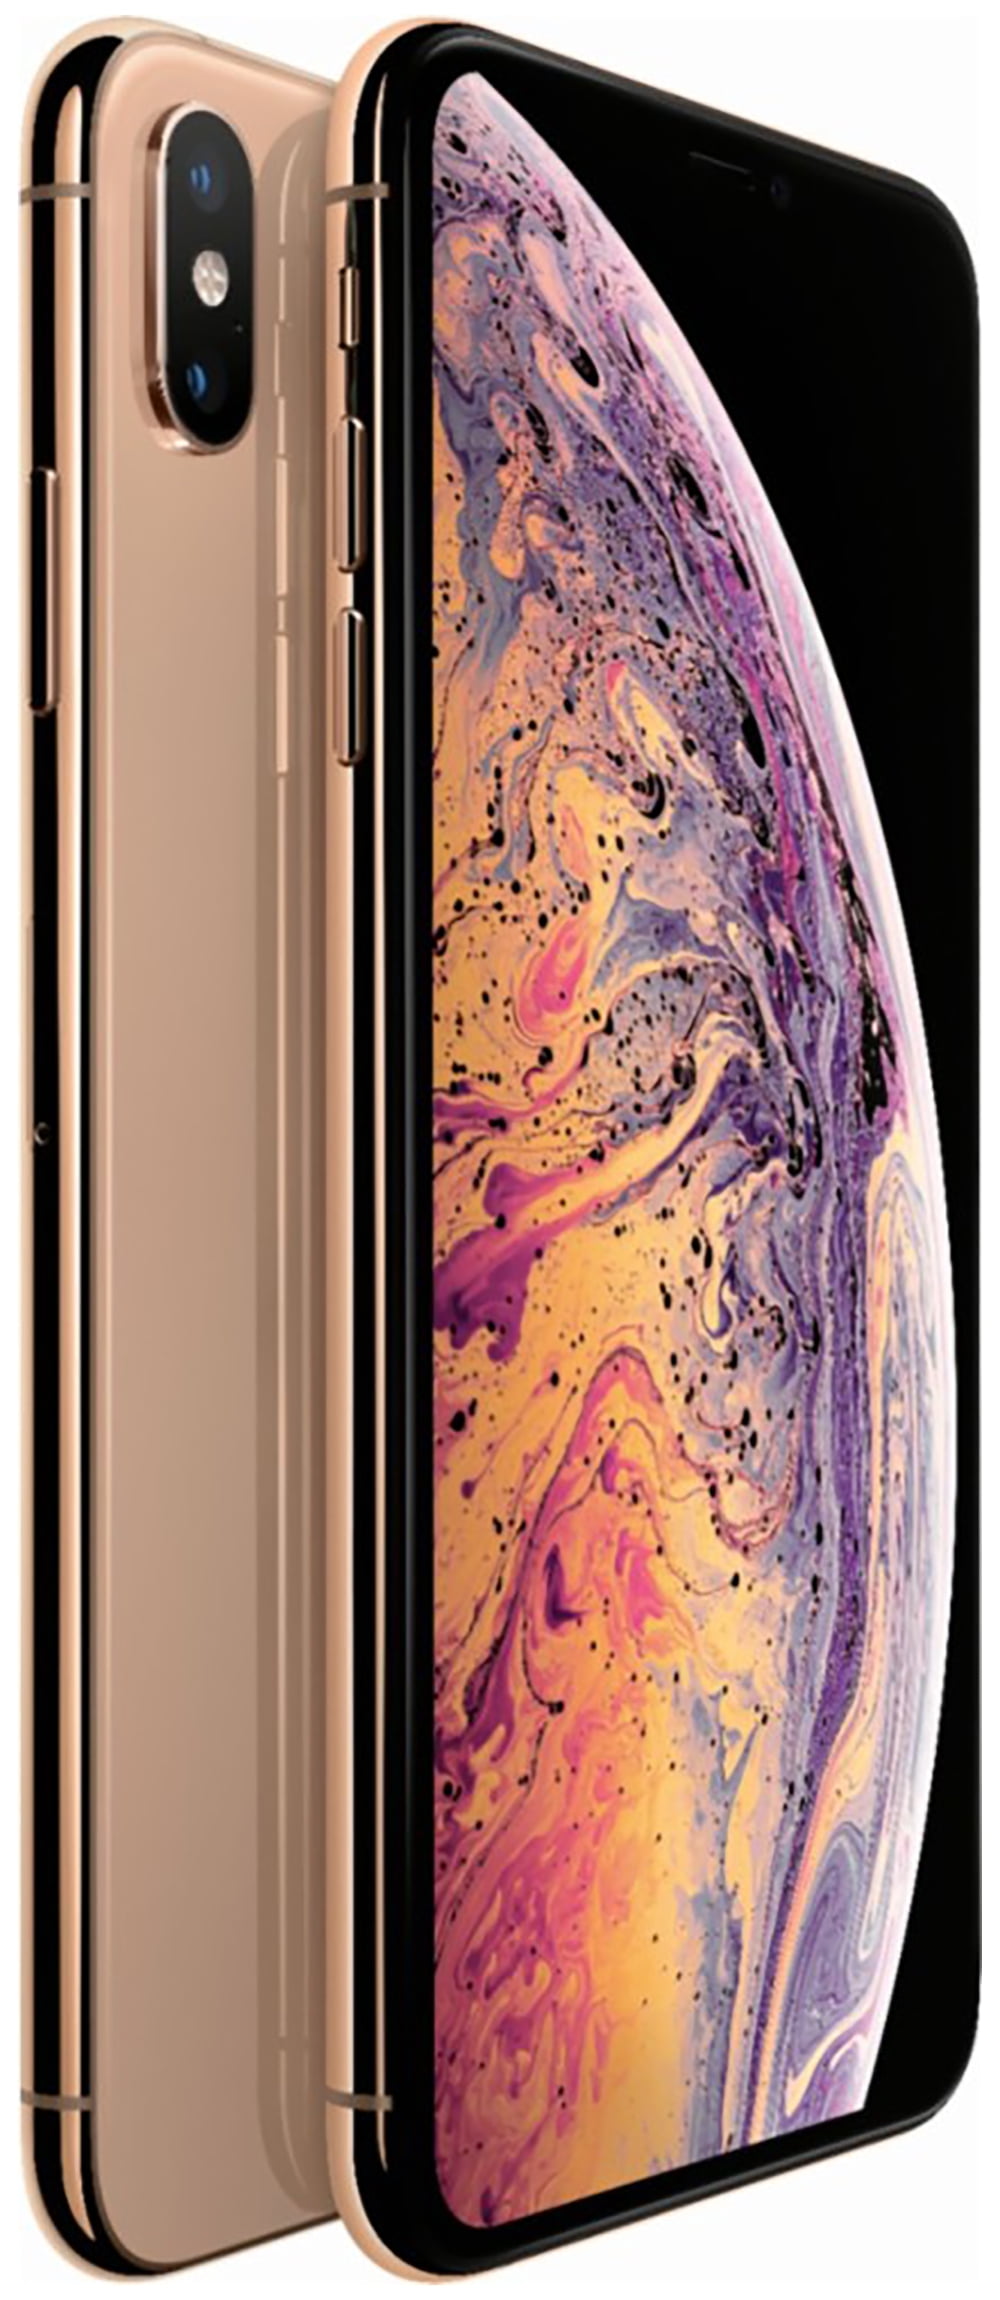 Apple iPhone XS Max 256GB Fully Unlocked (Verizon + Sprint + GSM Unlocked)  - Gold (Used)